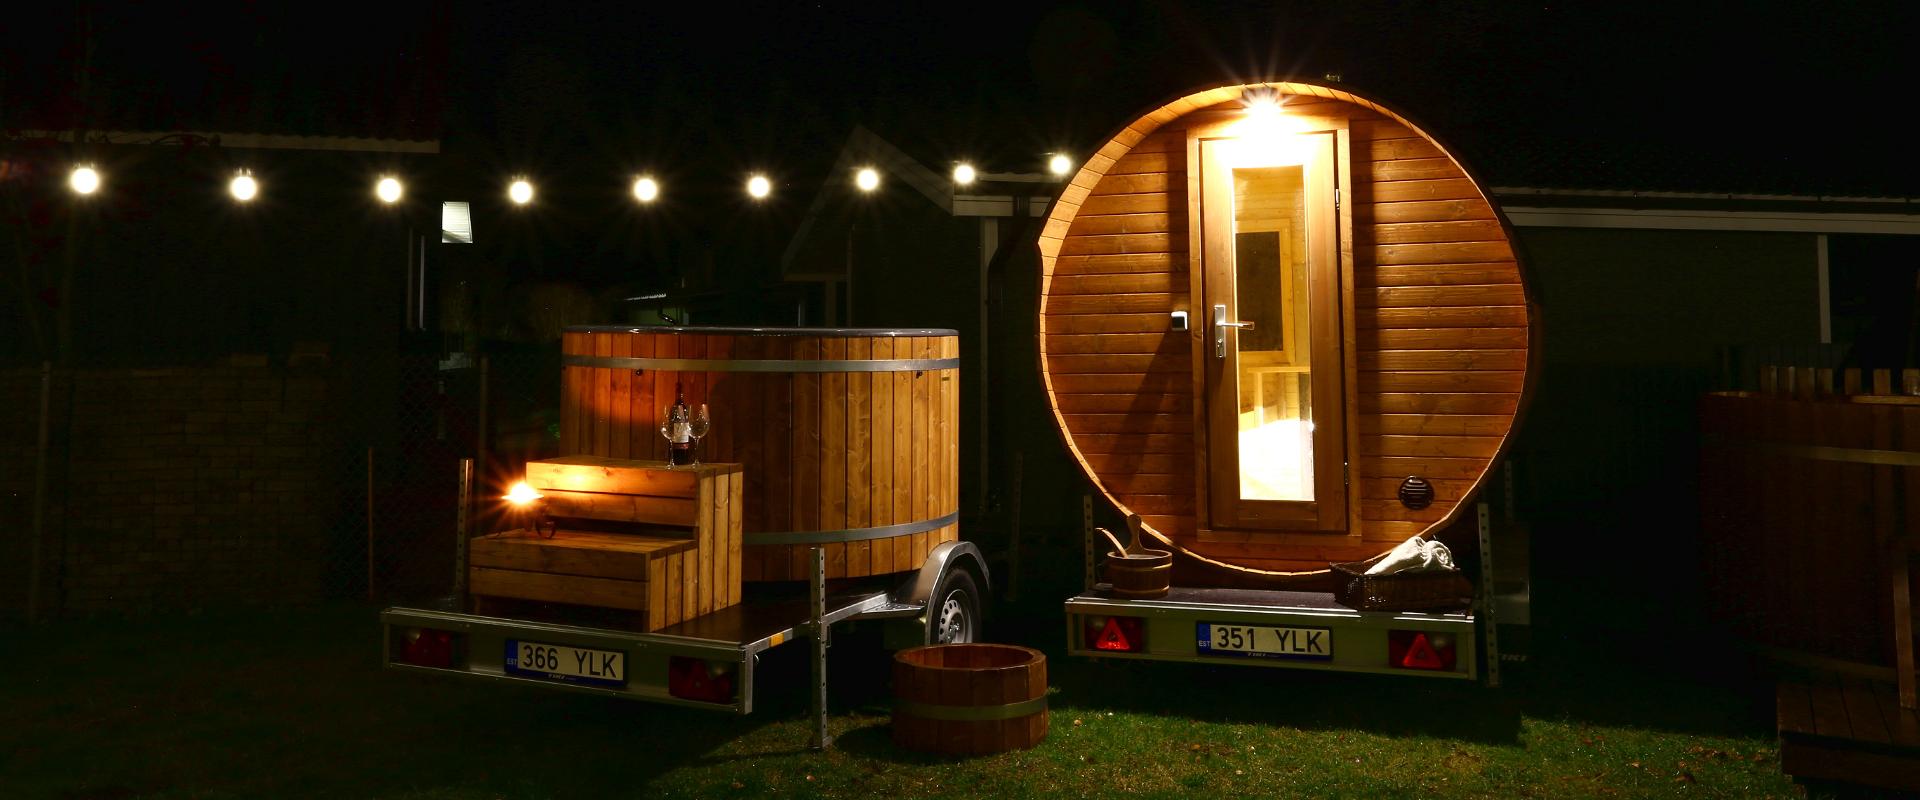 Trailer sauna and hot tub rental in Lääne County